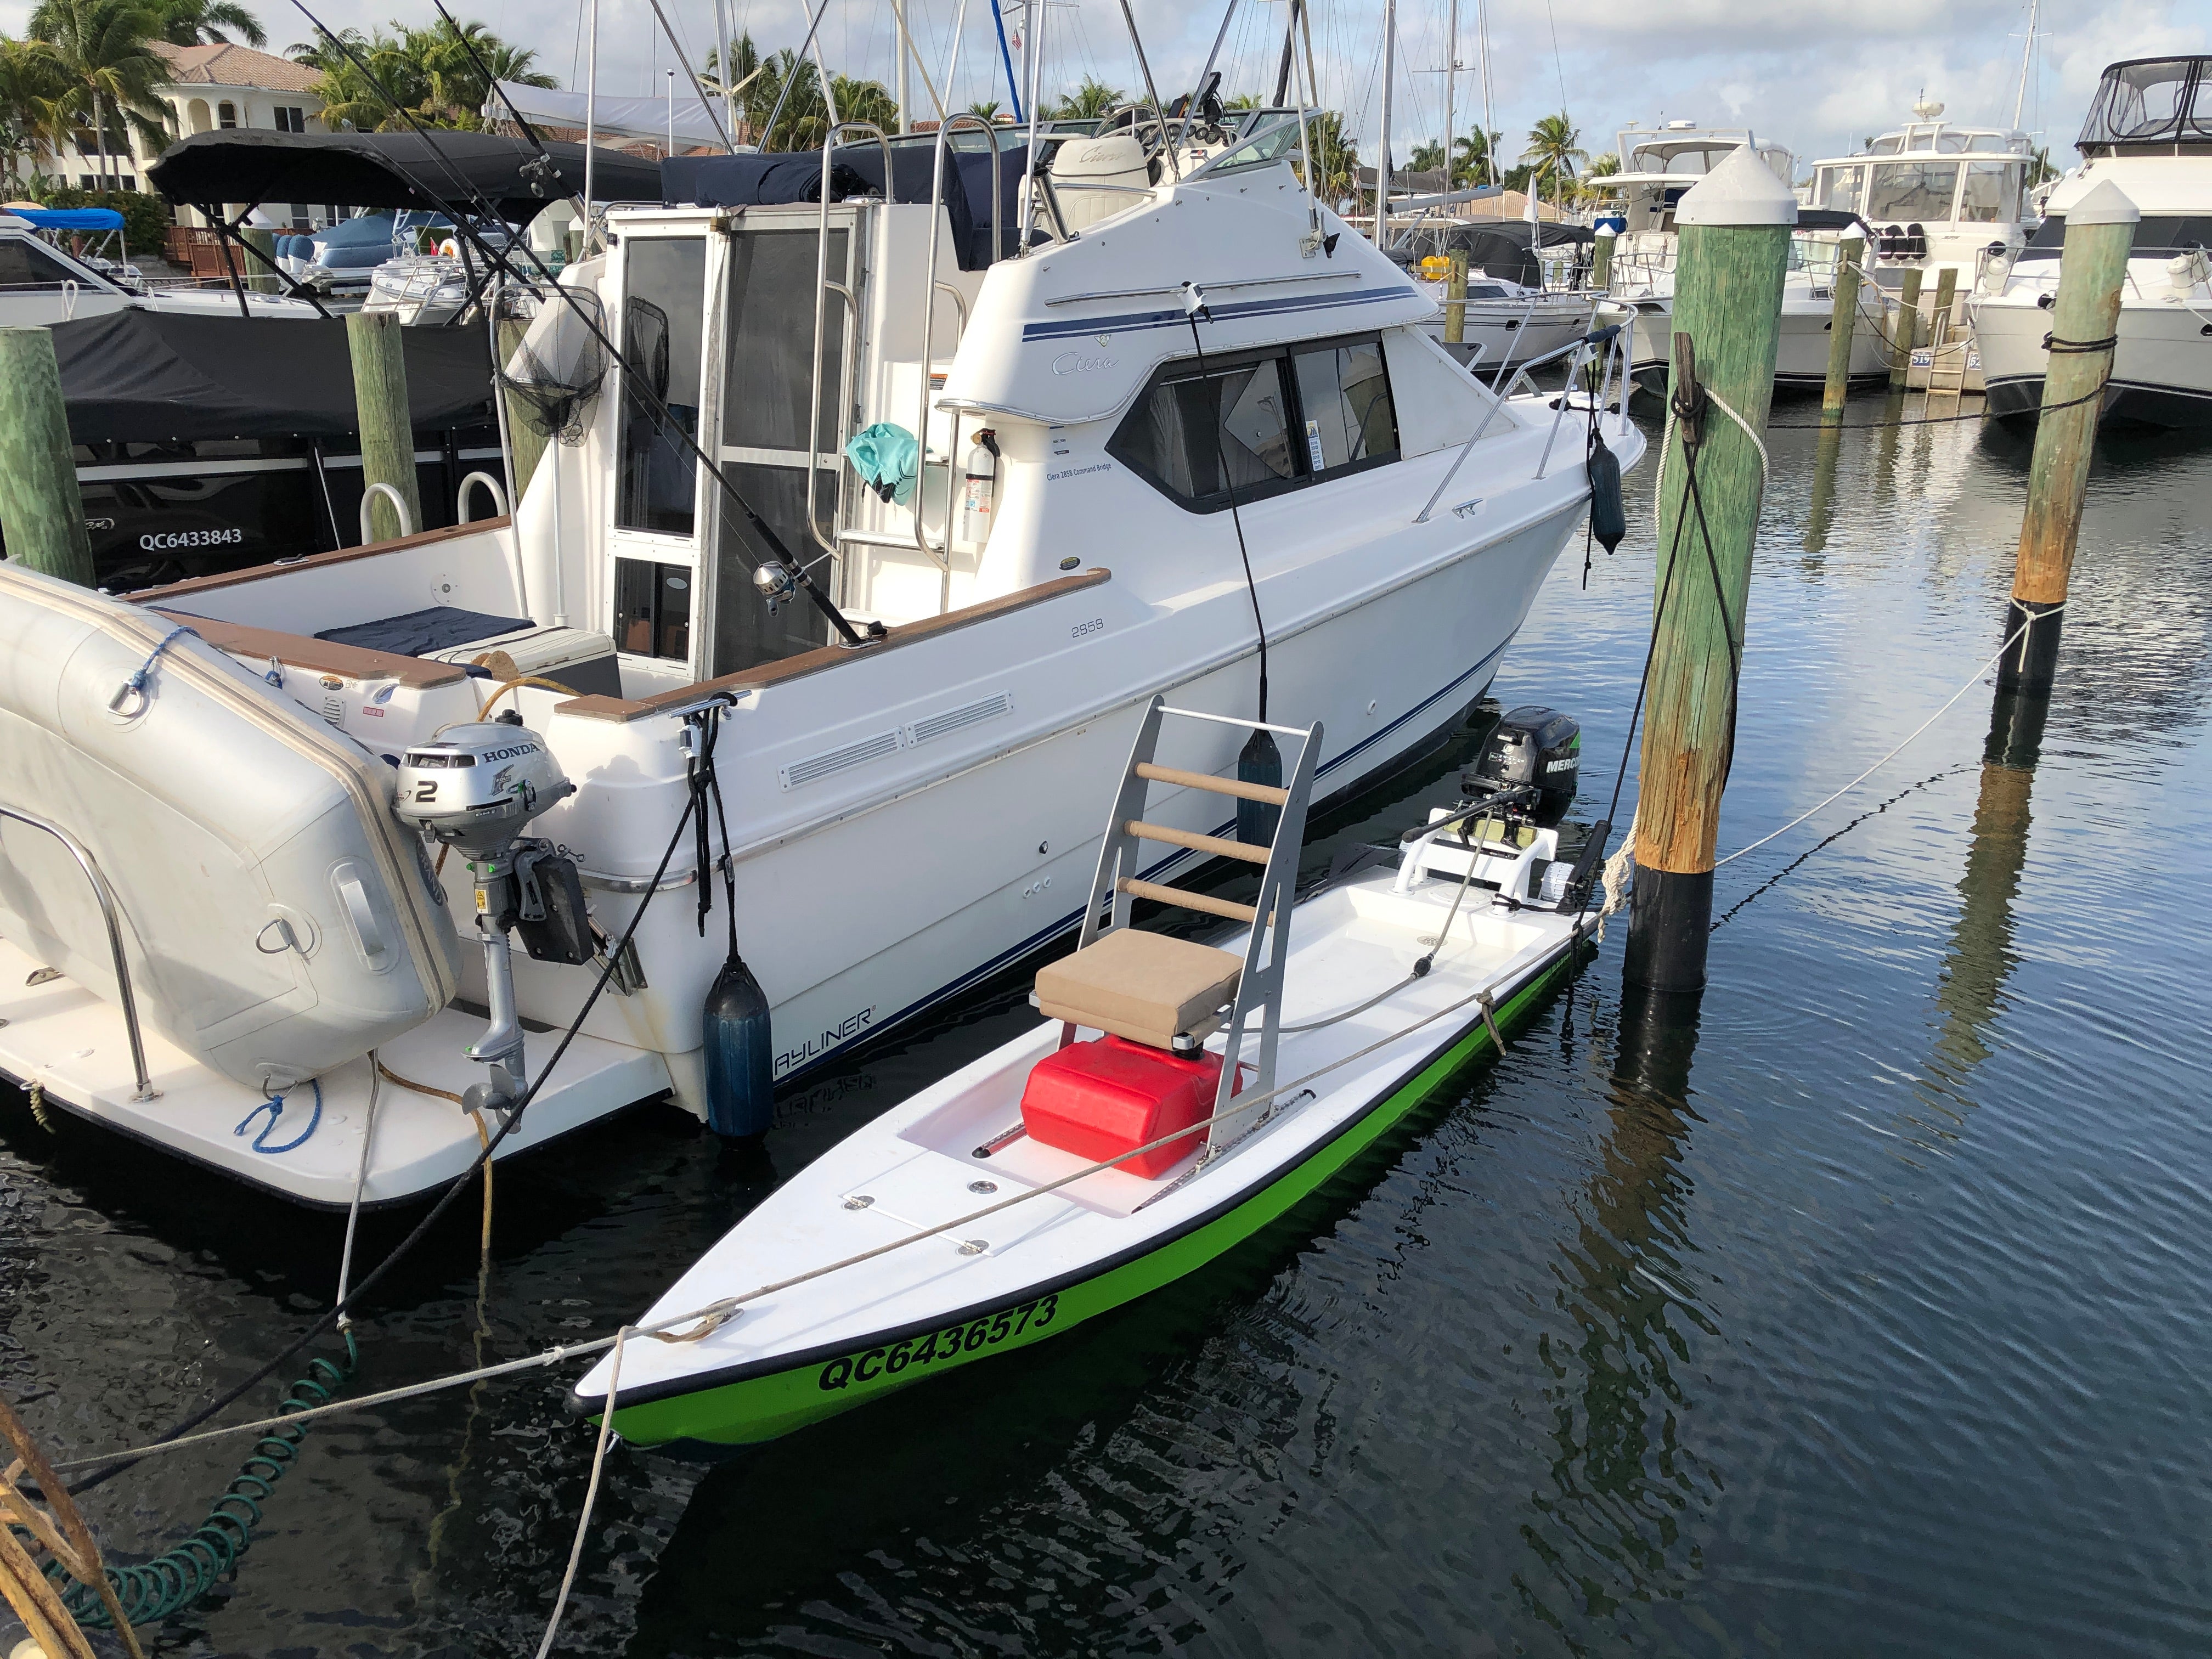 Ambush 13bt microskiff - pelican flat boat $3490 